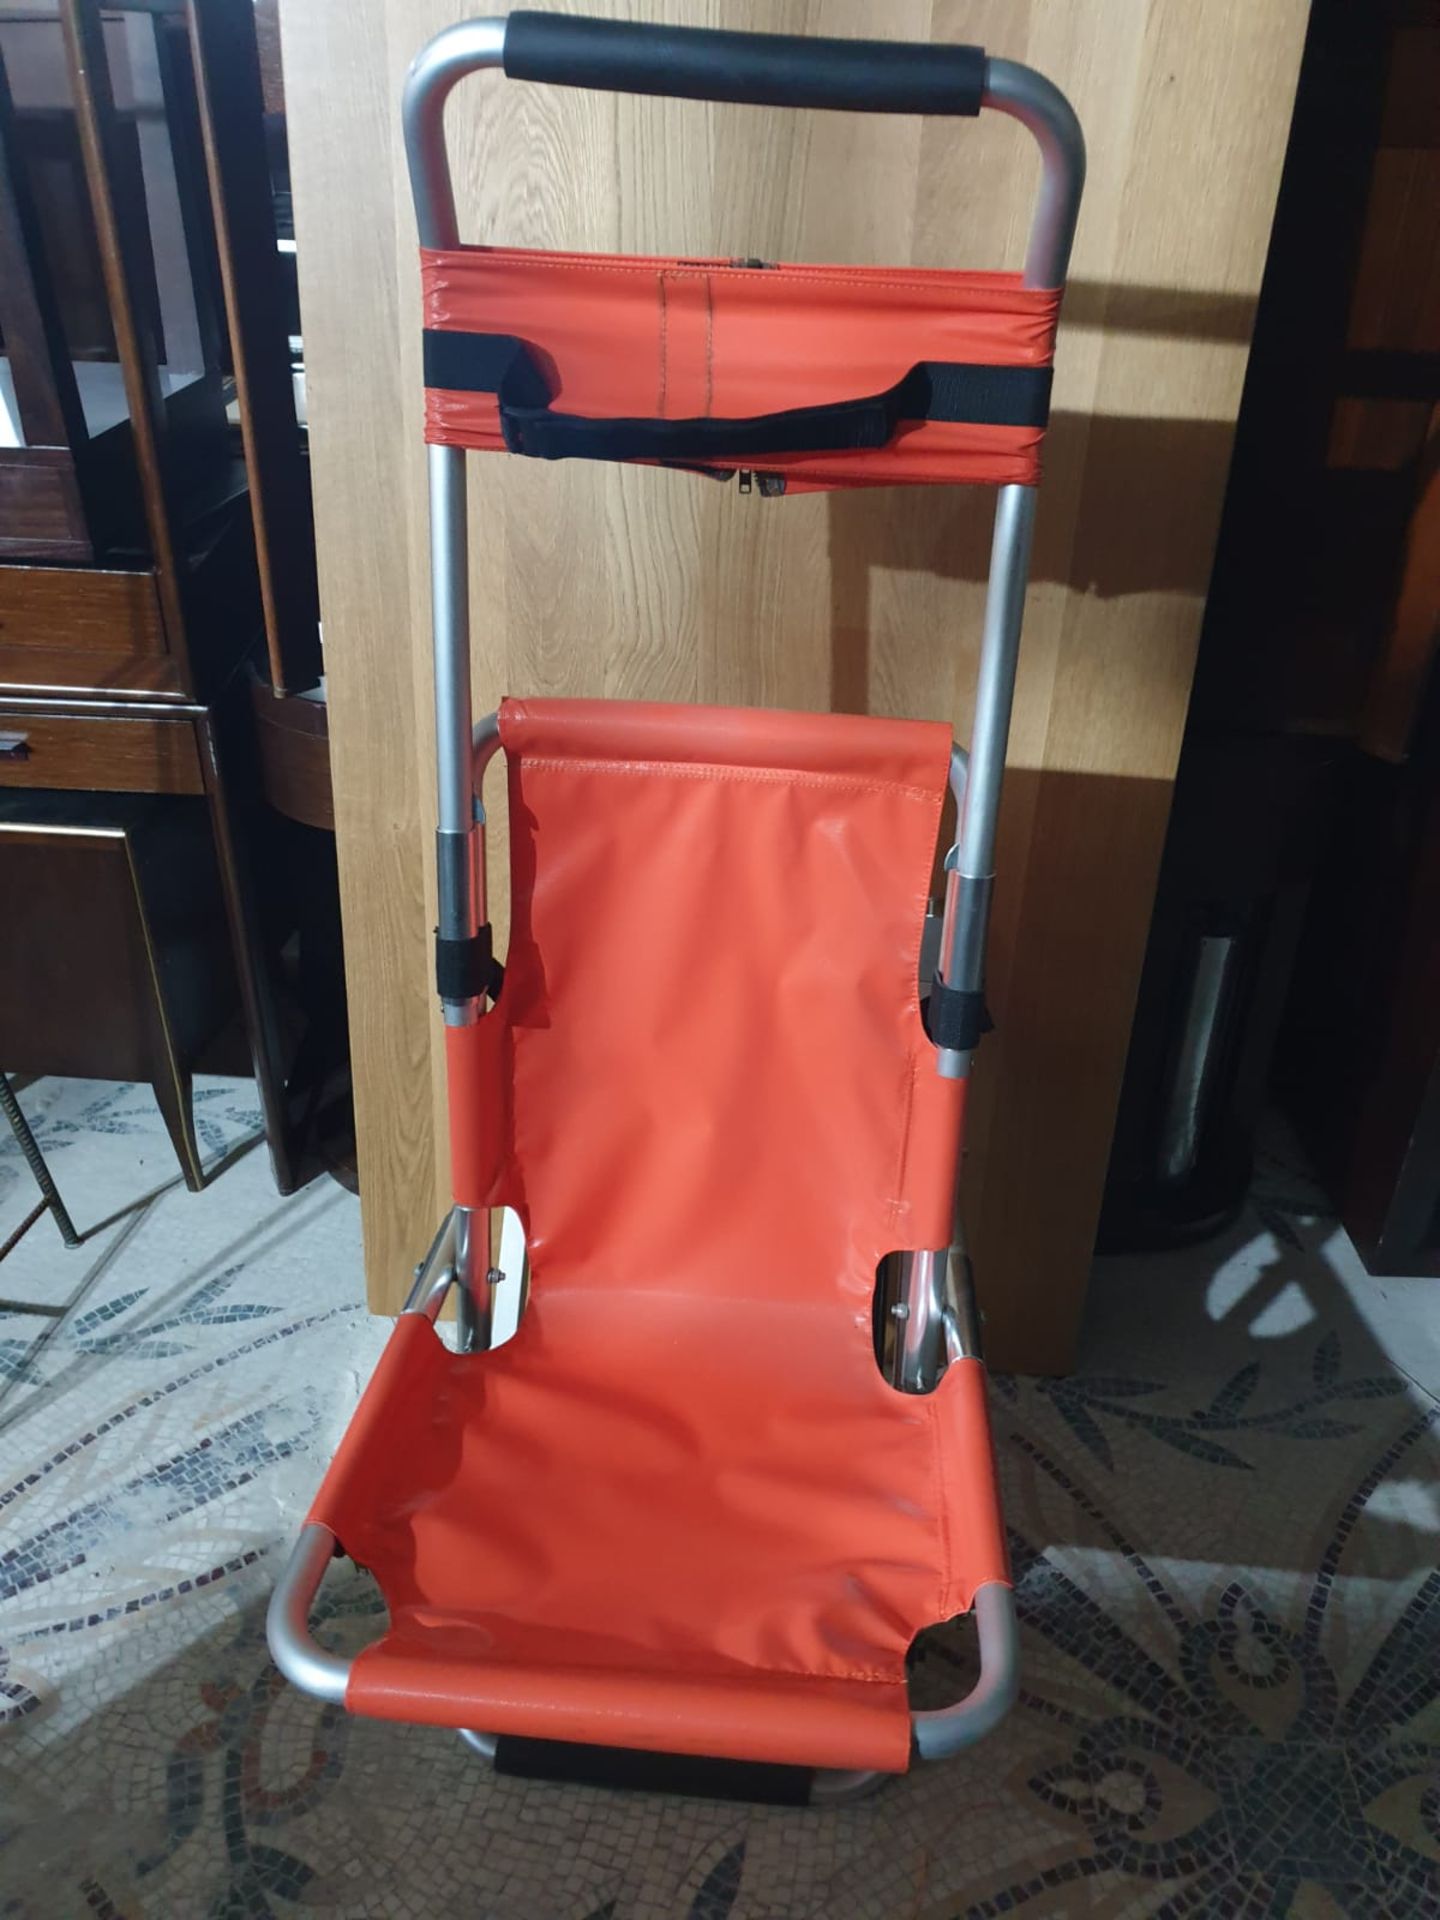 Relequip evacuation chair - Image 2 of 3